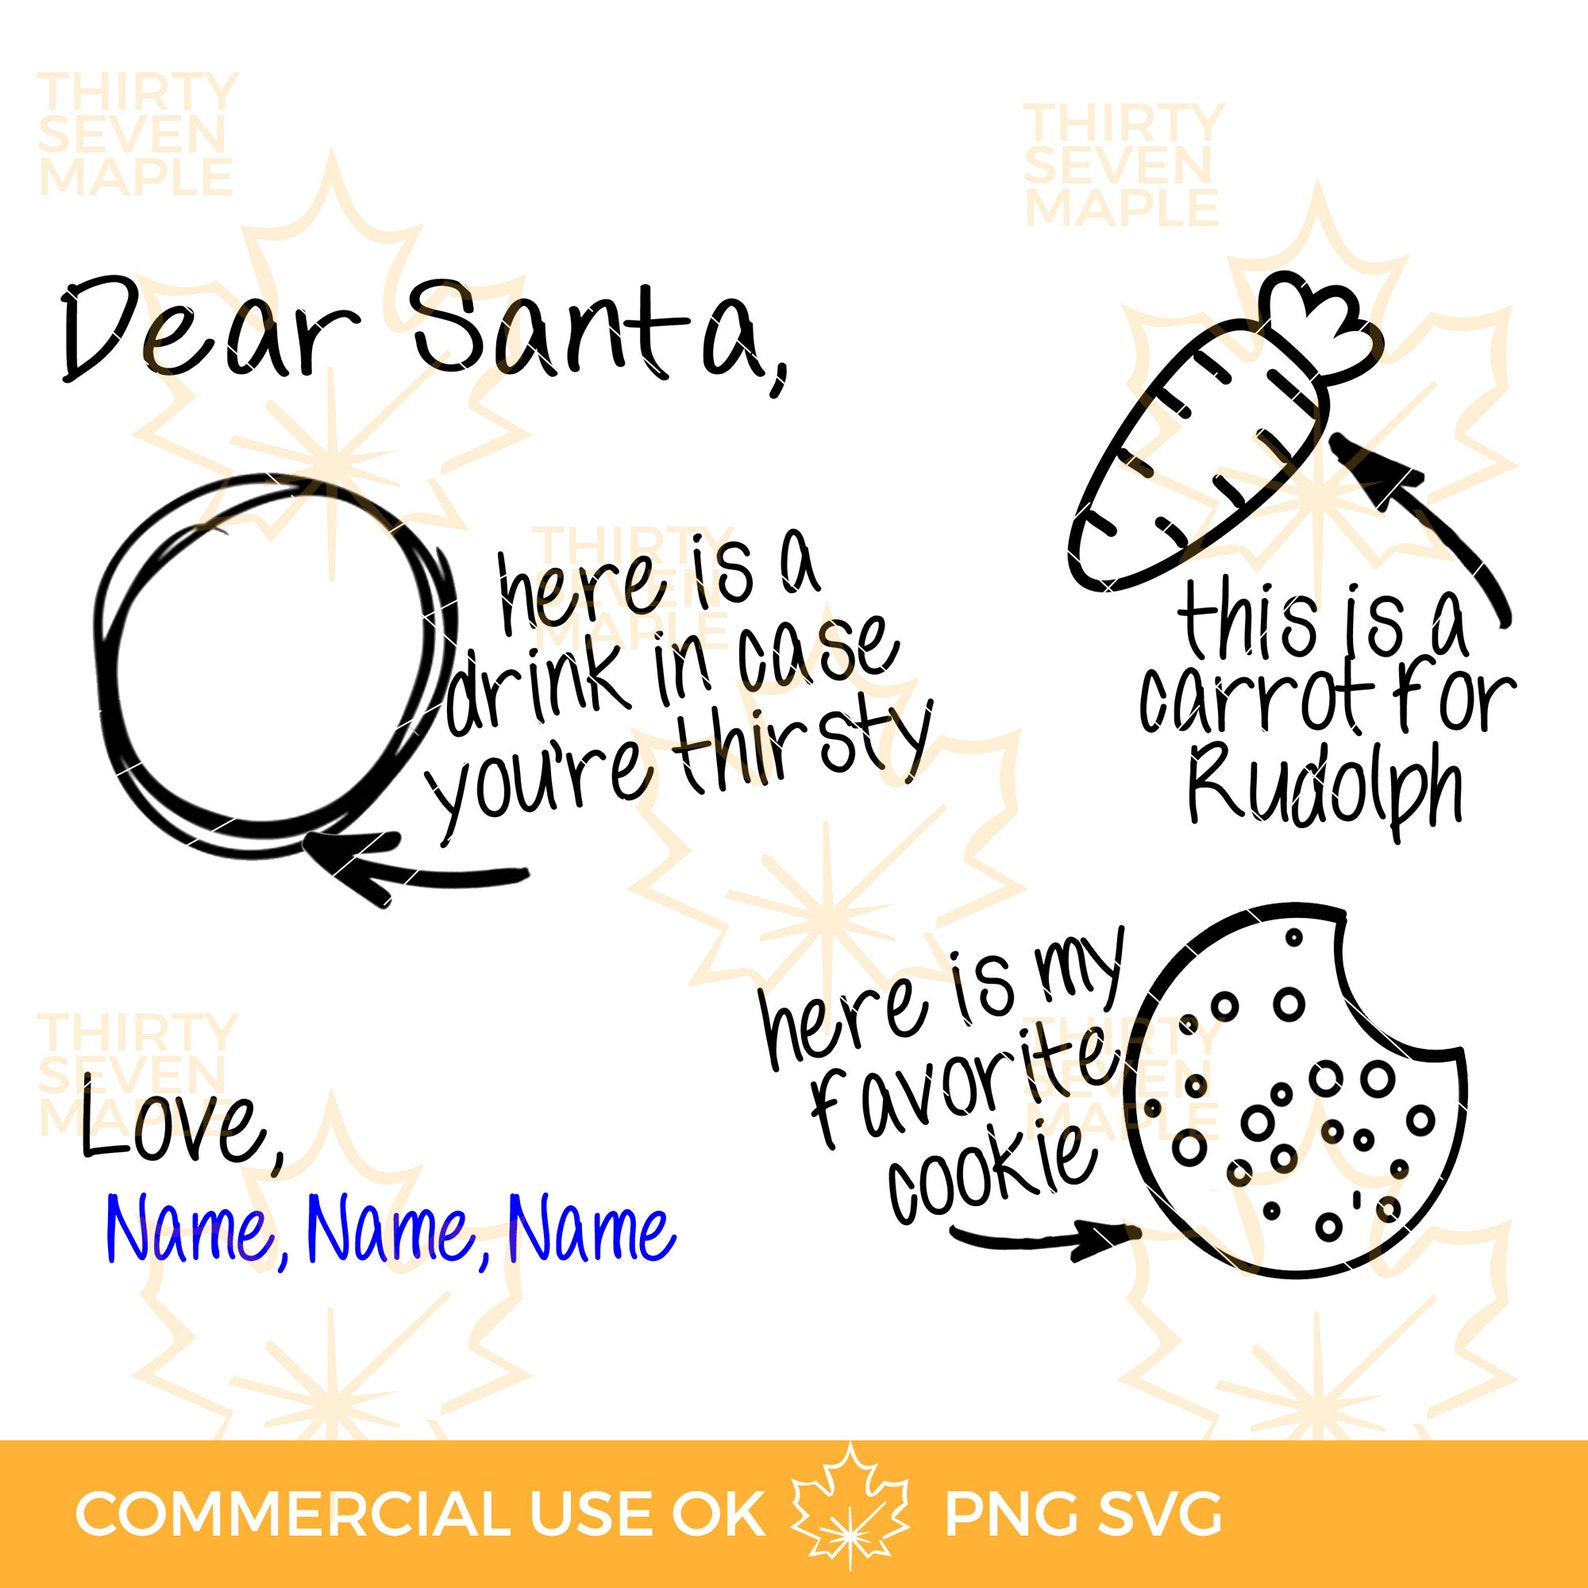 Dear Santa Cookies and Milk Tray SVG PNG image 1.